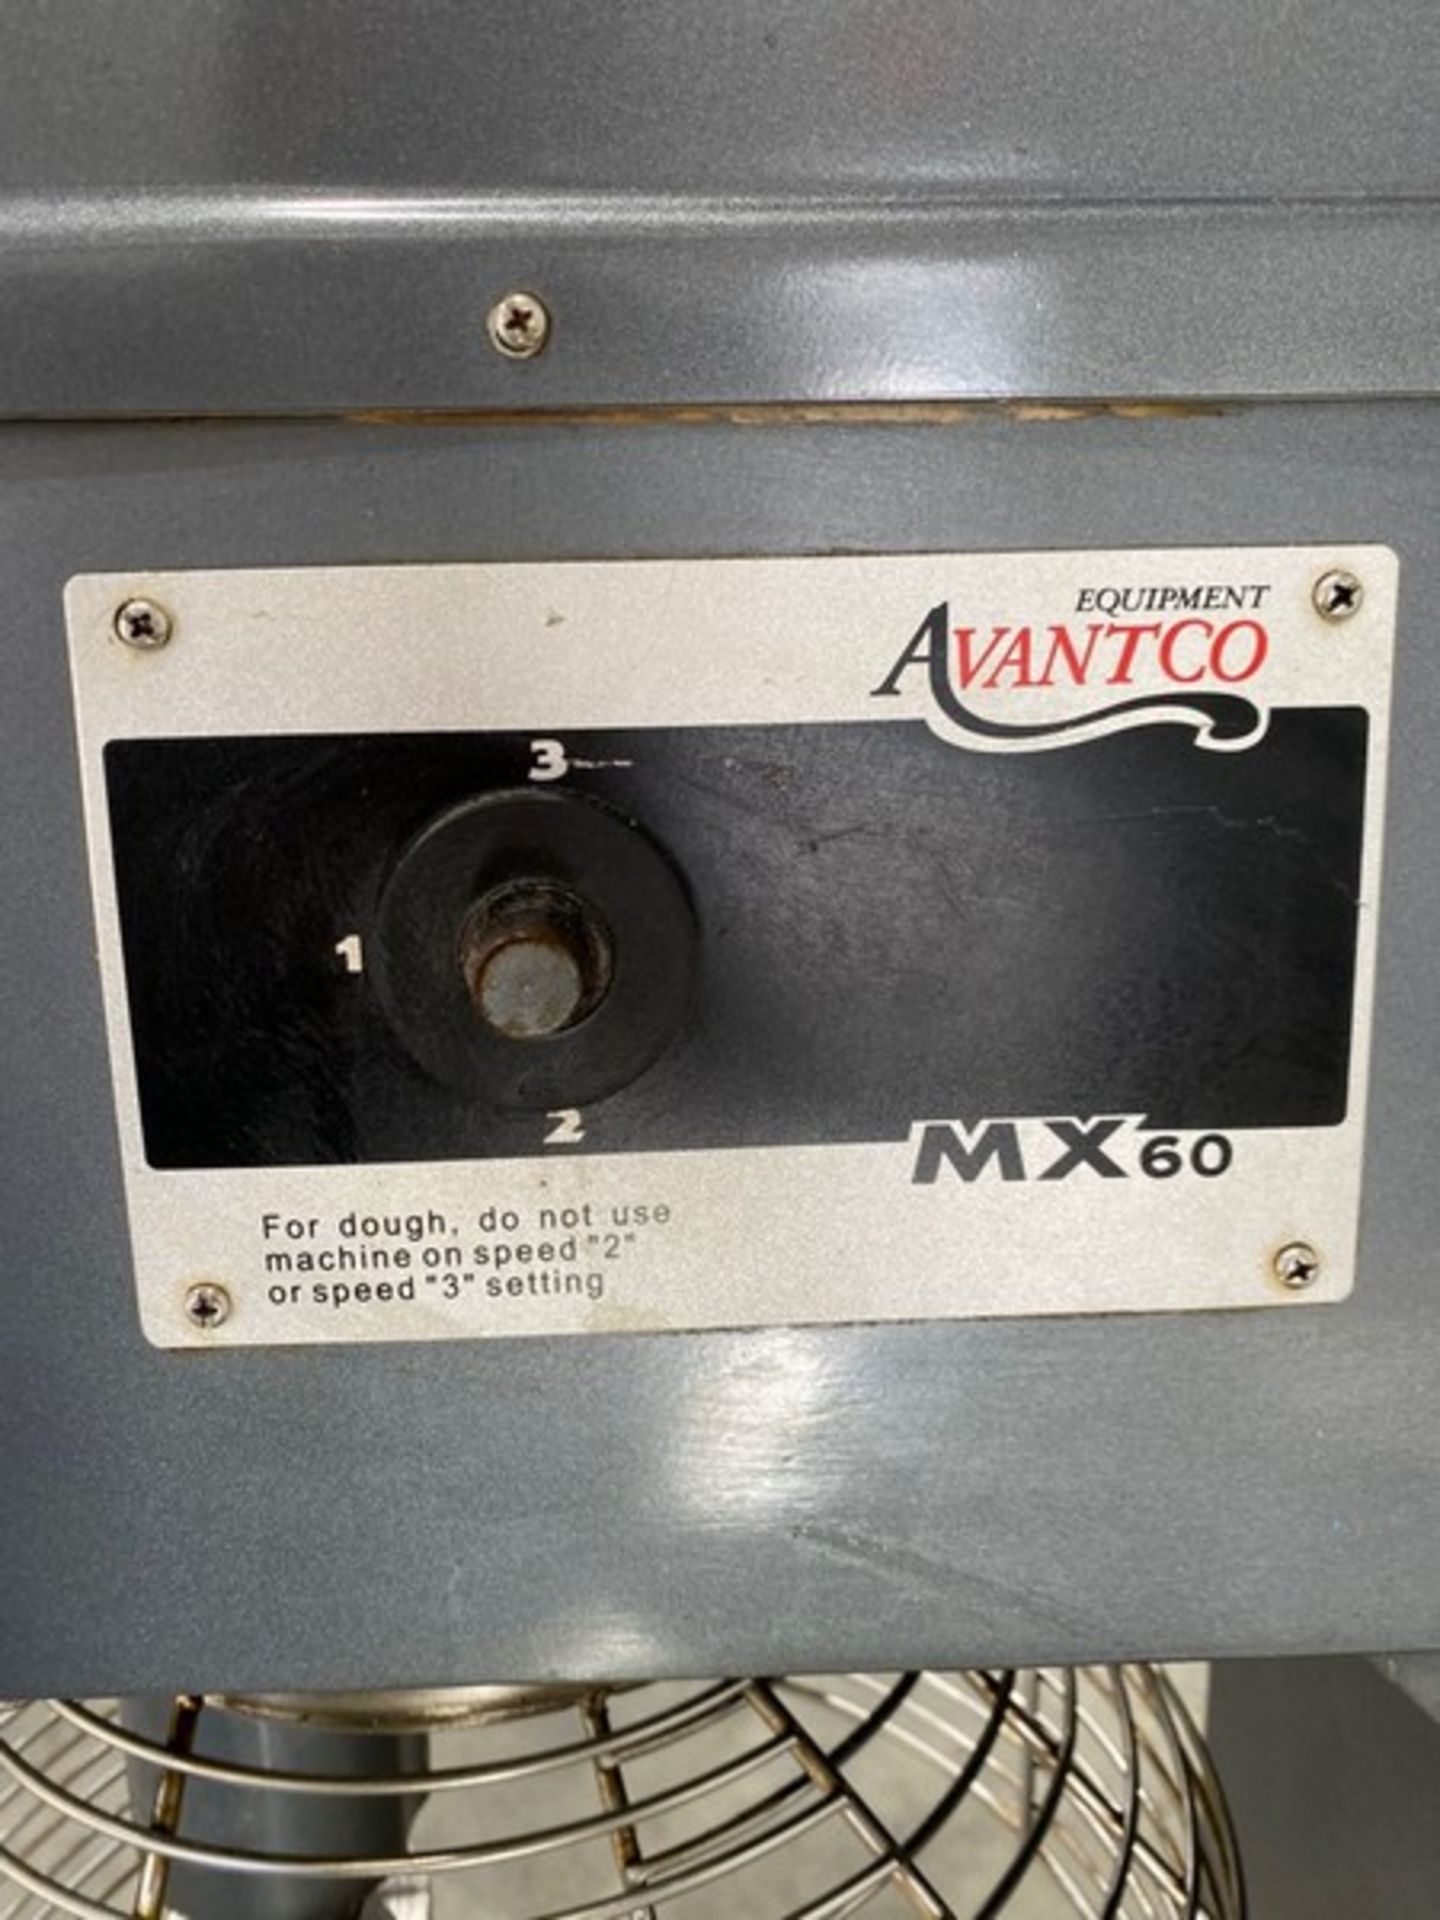 Avantco MX60 Mixer. Serial: 03 0021 16, 60Qt capacity. 240 Volts, 3 Phase, 60 Hz. Bowl is stainless - Bild 5 aus 5